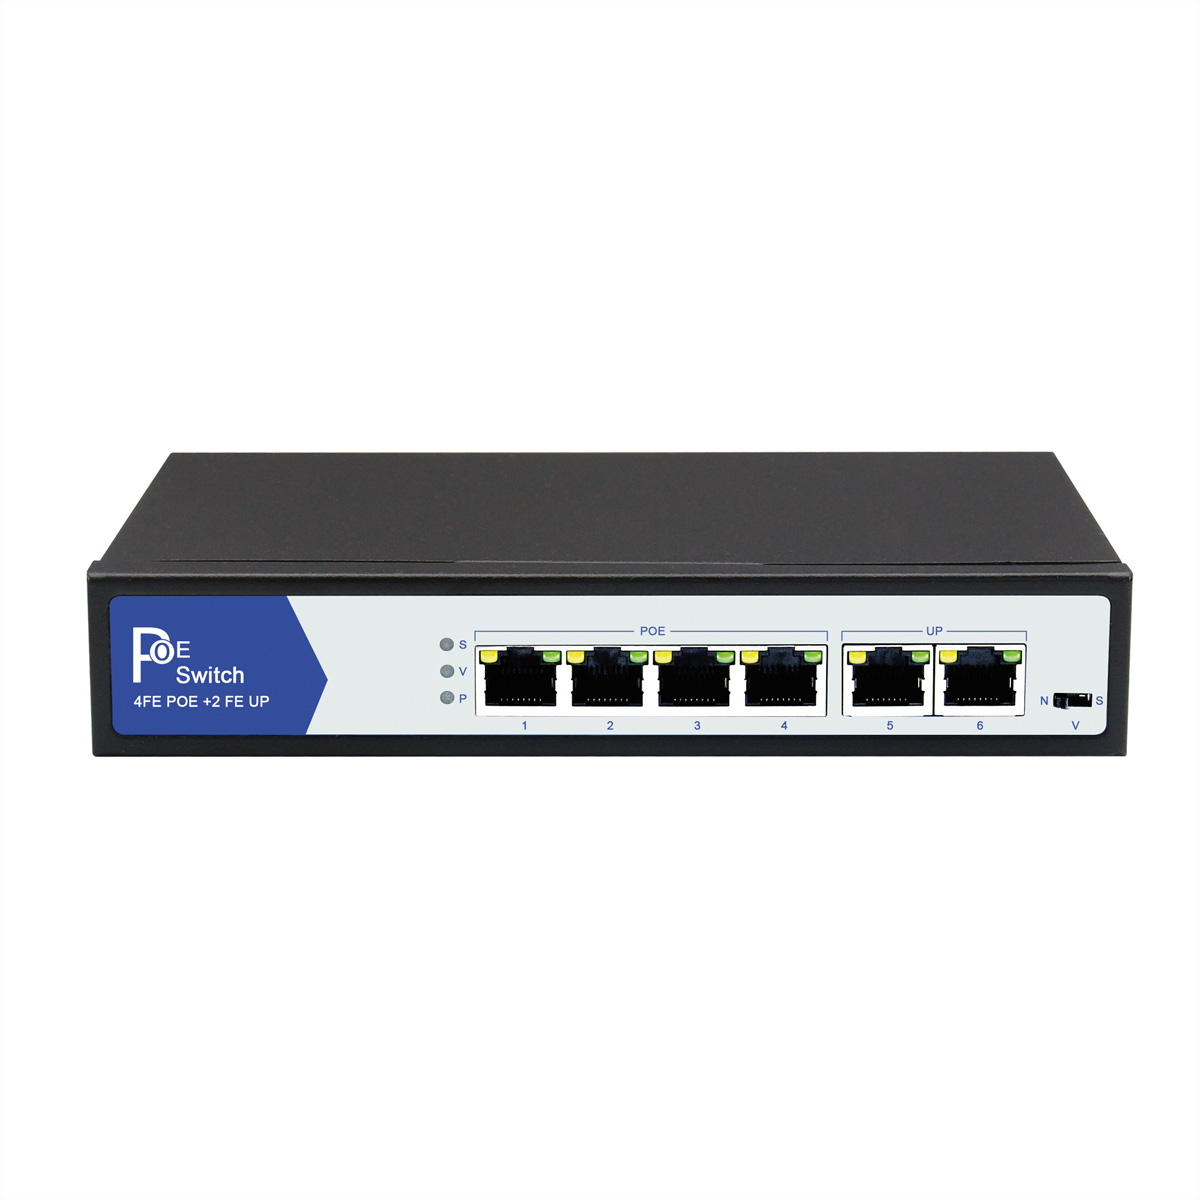 VALUE PoE+ Fast Ethernet Switch, 4 Ports + 2 Uplink Ports